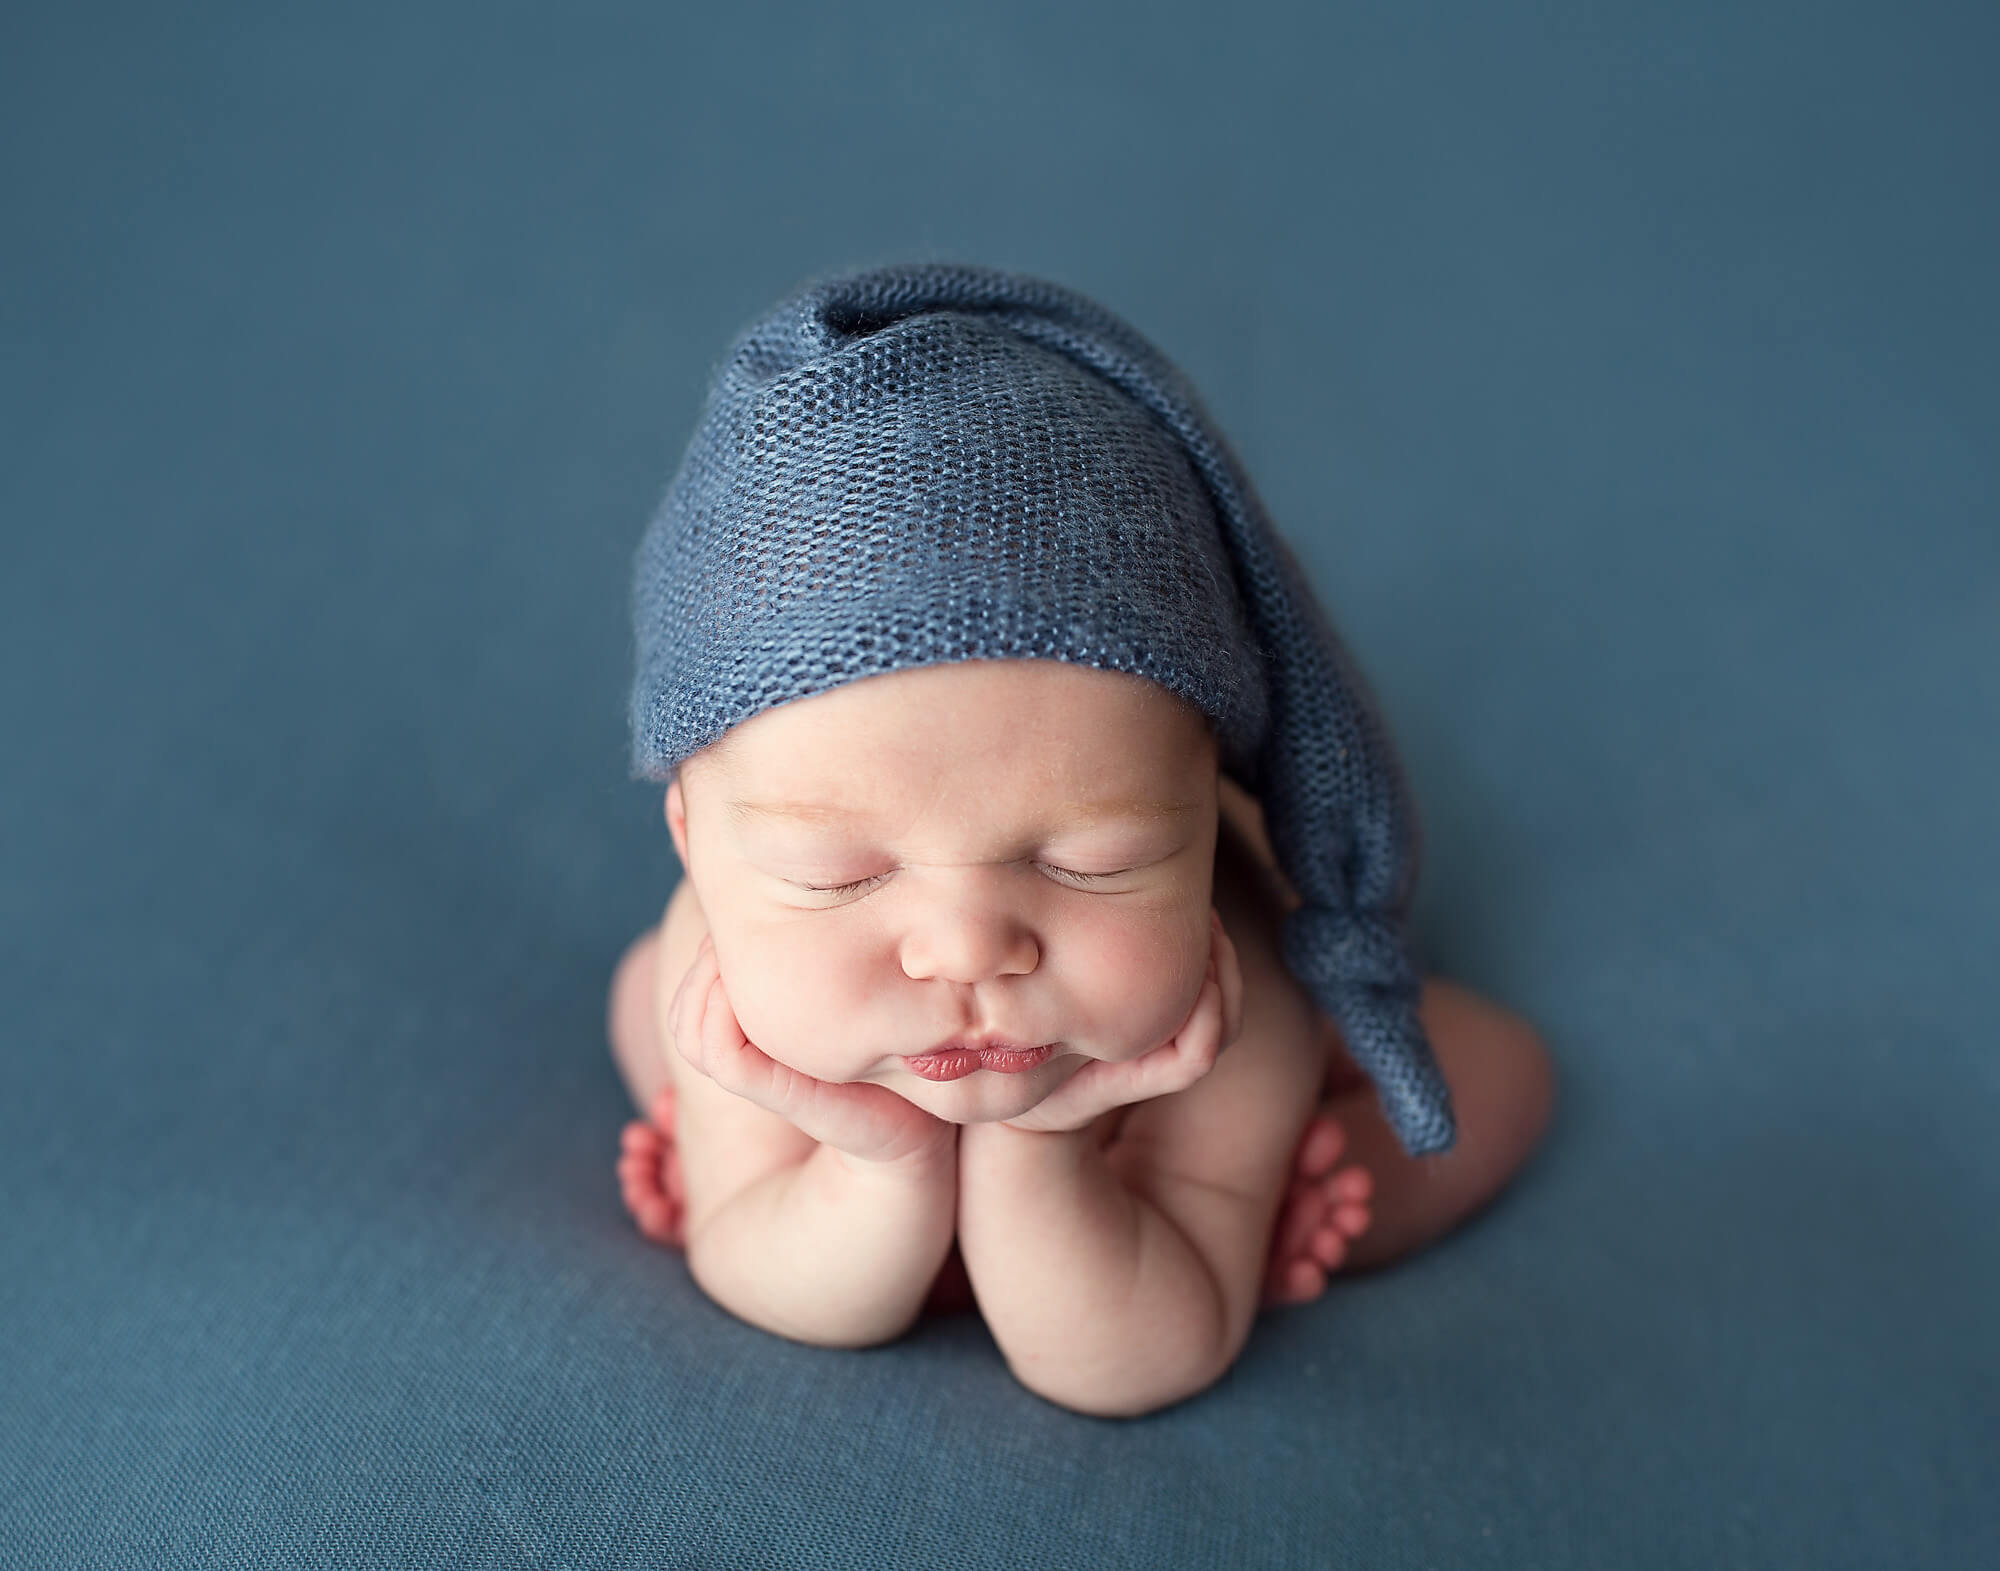 Baby boy in blue in froggy pose newborn photographer australia